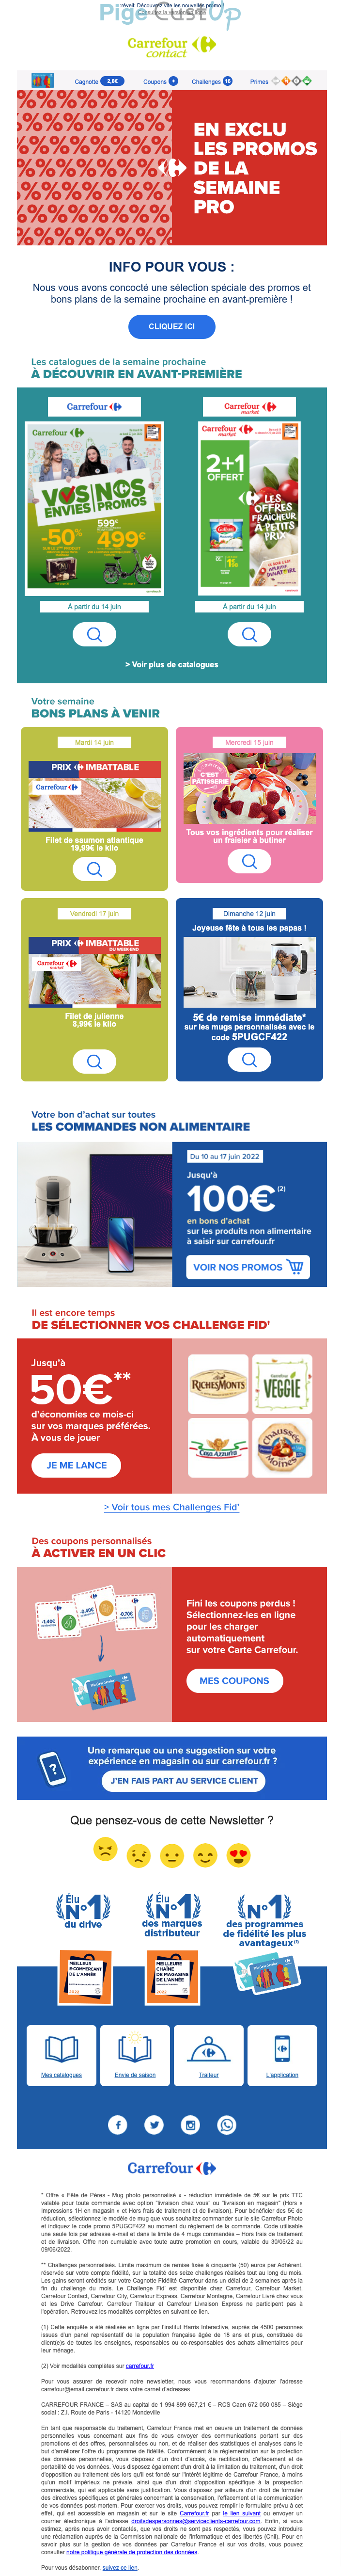 Exemple de Type de media  e-mailing - Carrefour - Marketing relationnel - Newsletter